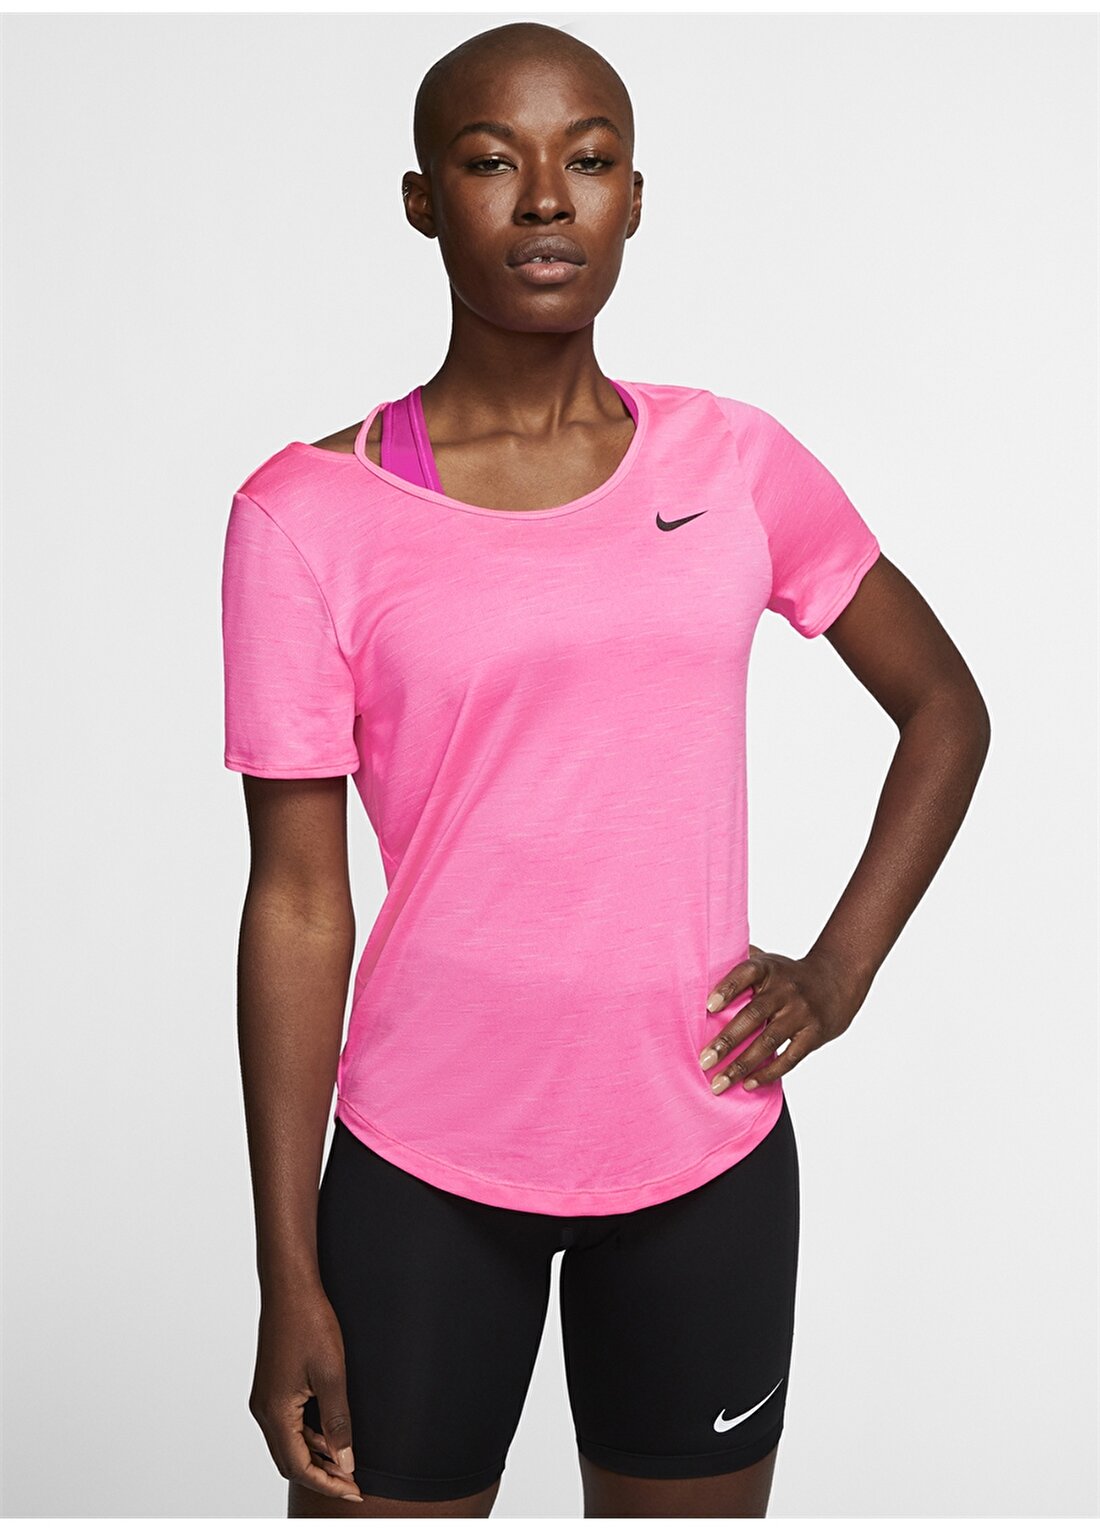 Nike Top Runway T-Shirt